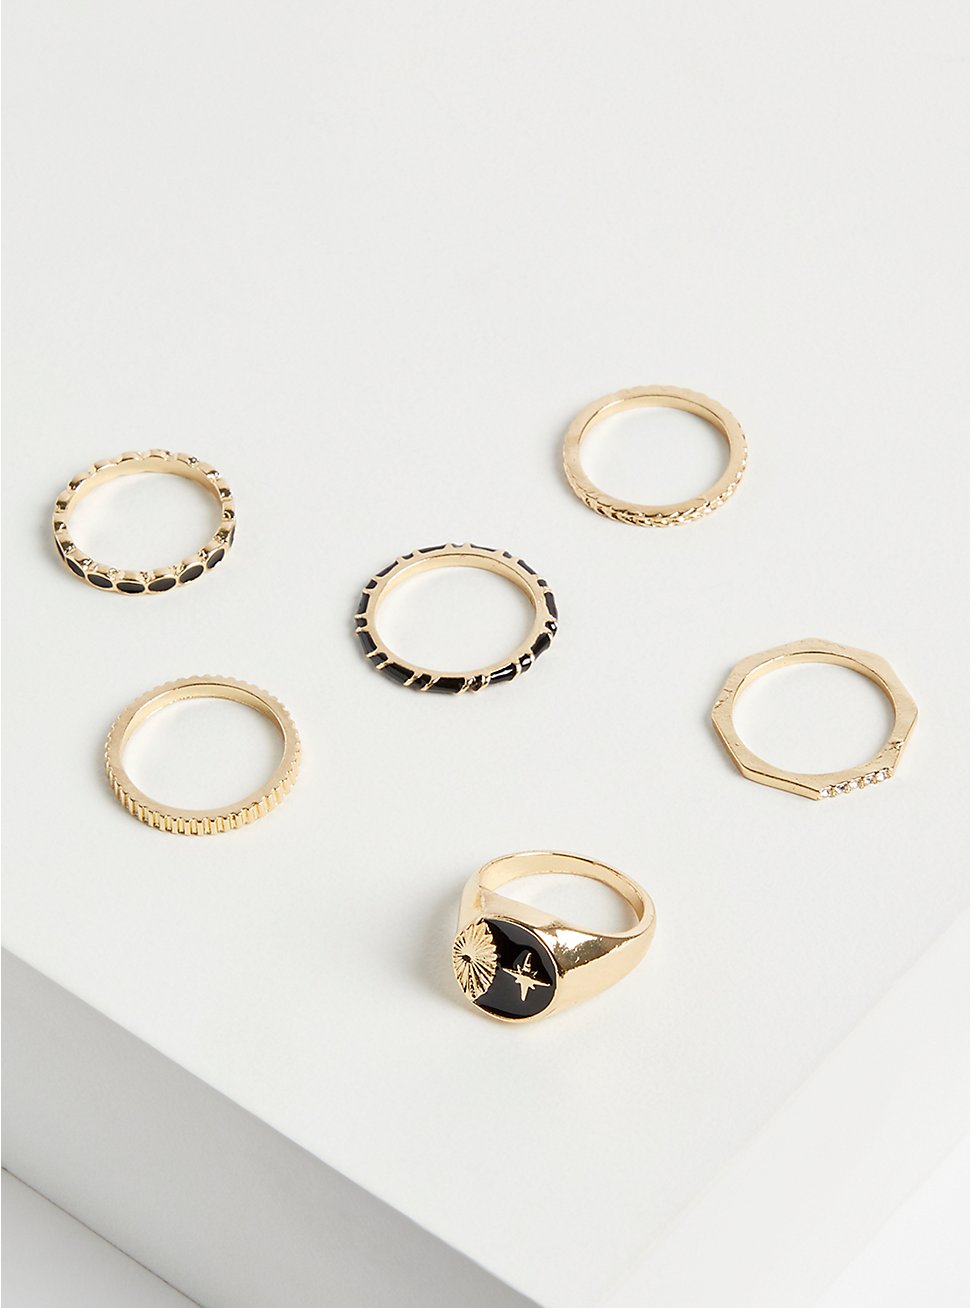 Plus Size Signet Ring Set of 6 - Black & Gold Tone, GOLD, hi-res